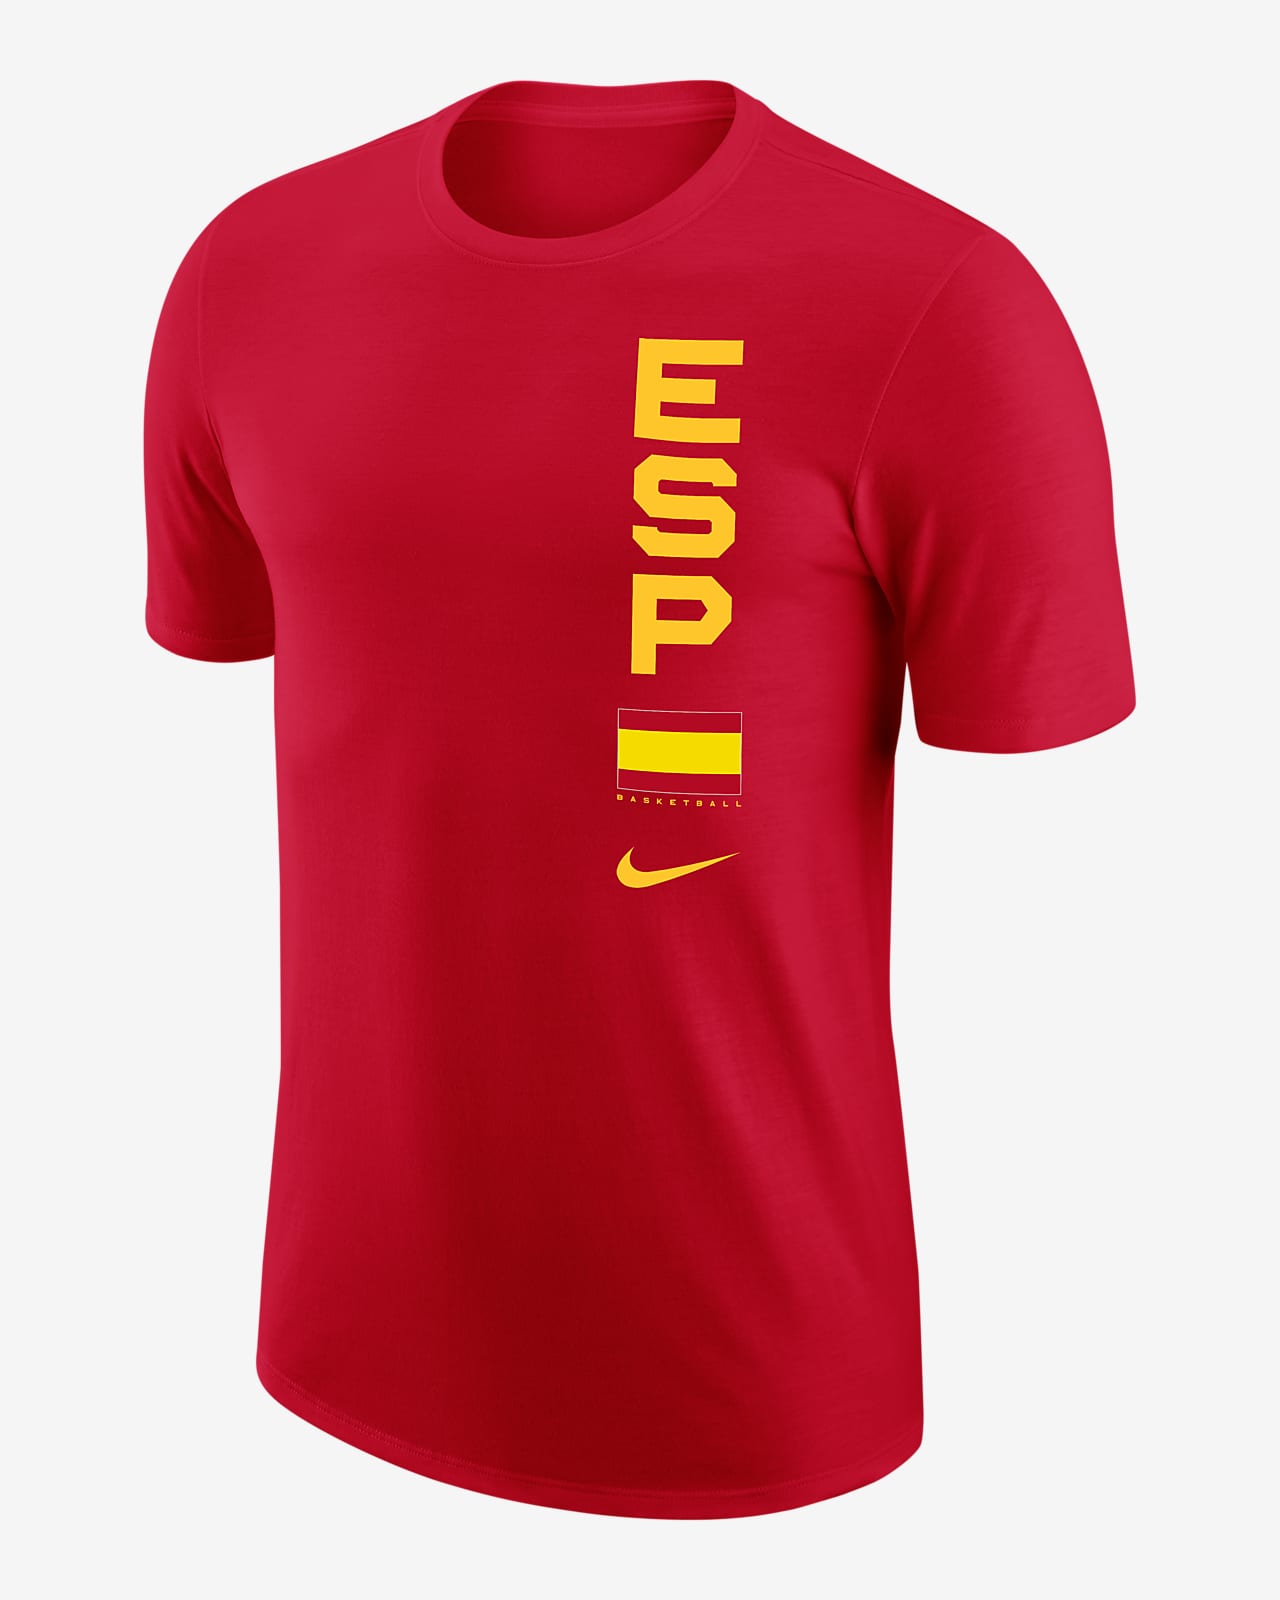 Spain Nike Dri-FIT Men's Team Basketball T-Shirt